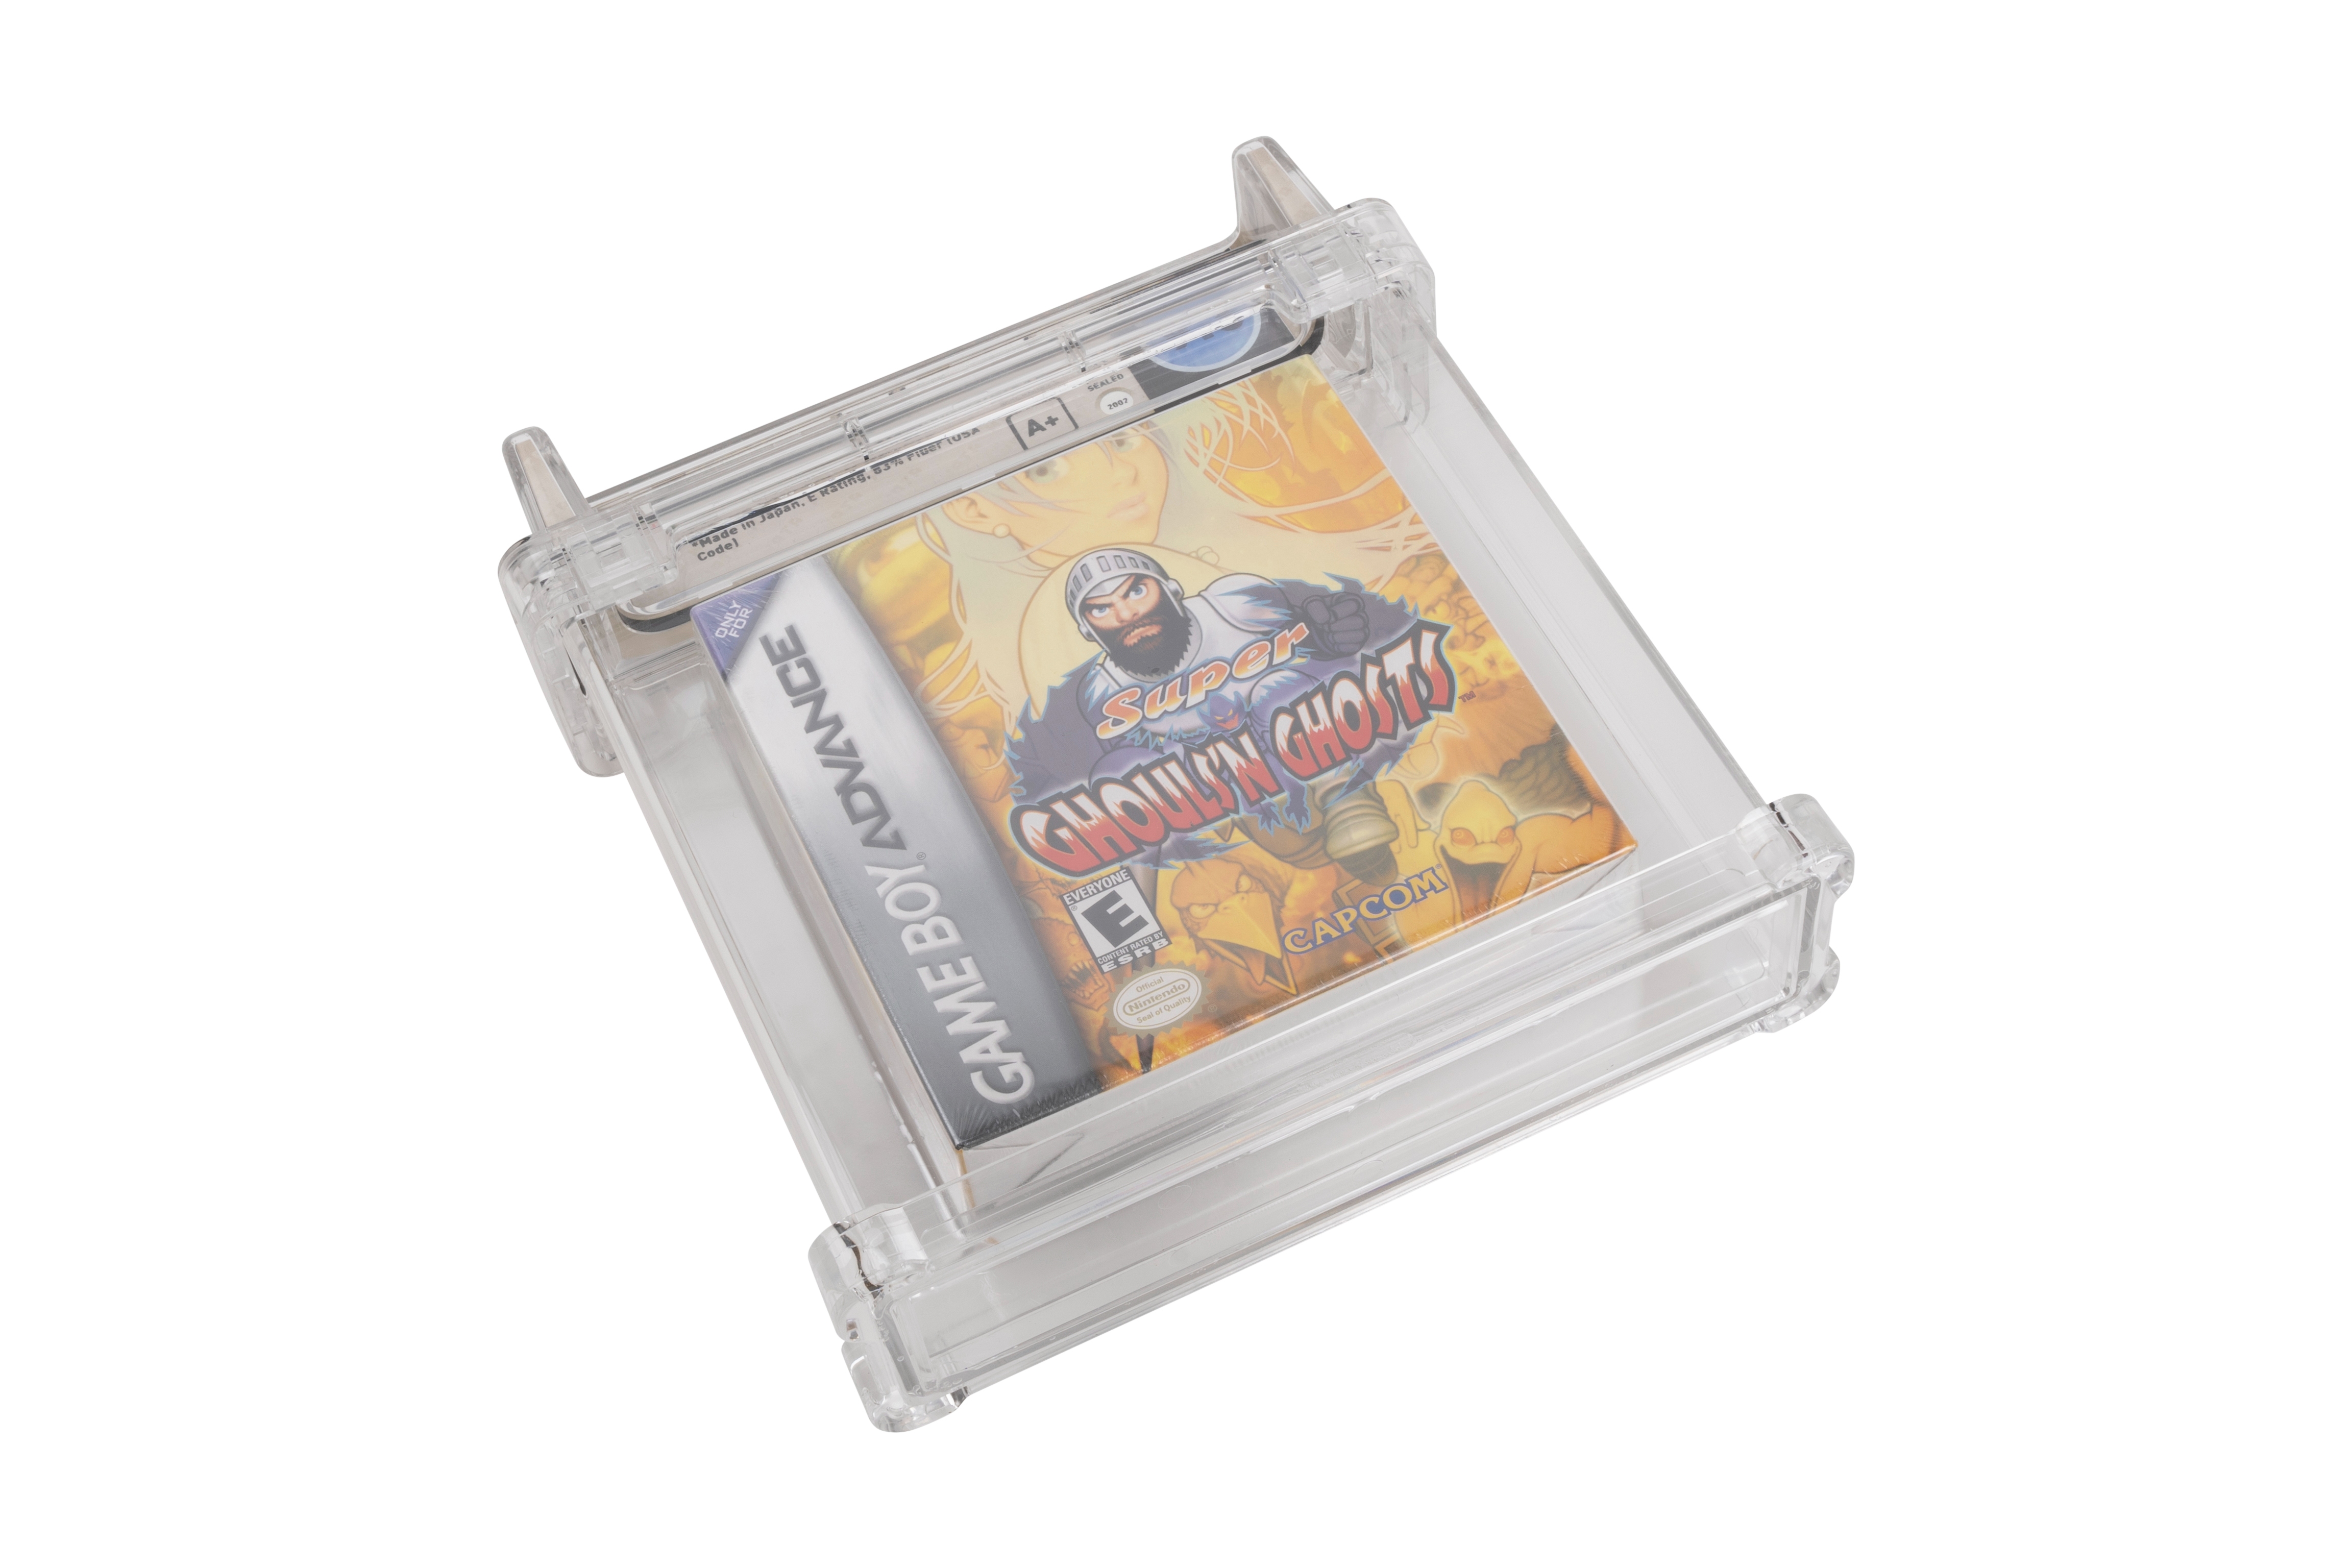 Nintendo - WATA Super Ghouls'n Ghosts 9.6 A+ - Game Boy Advanced